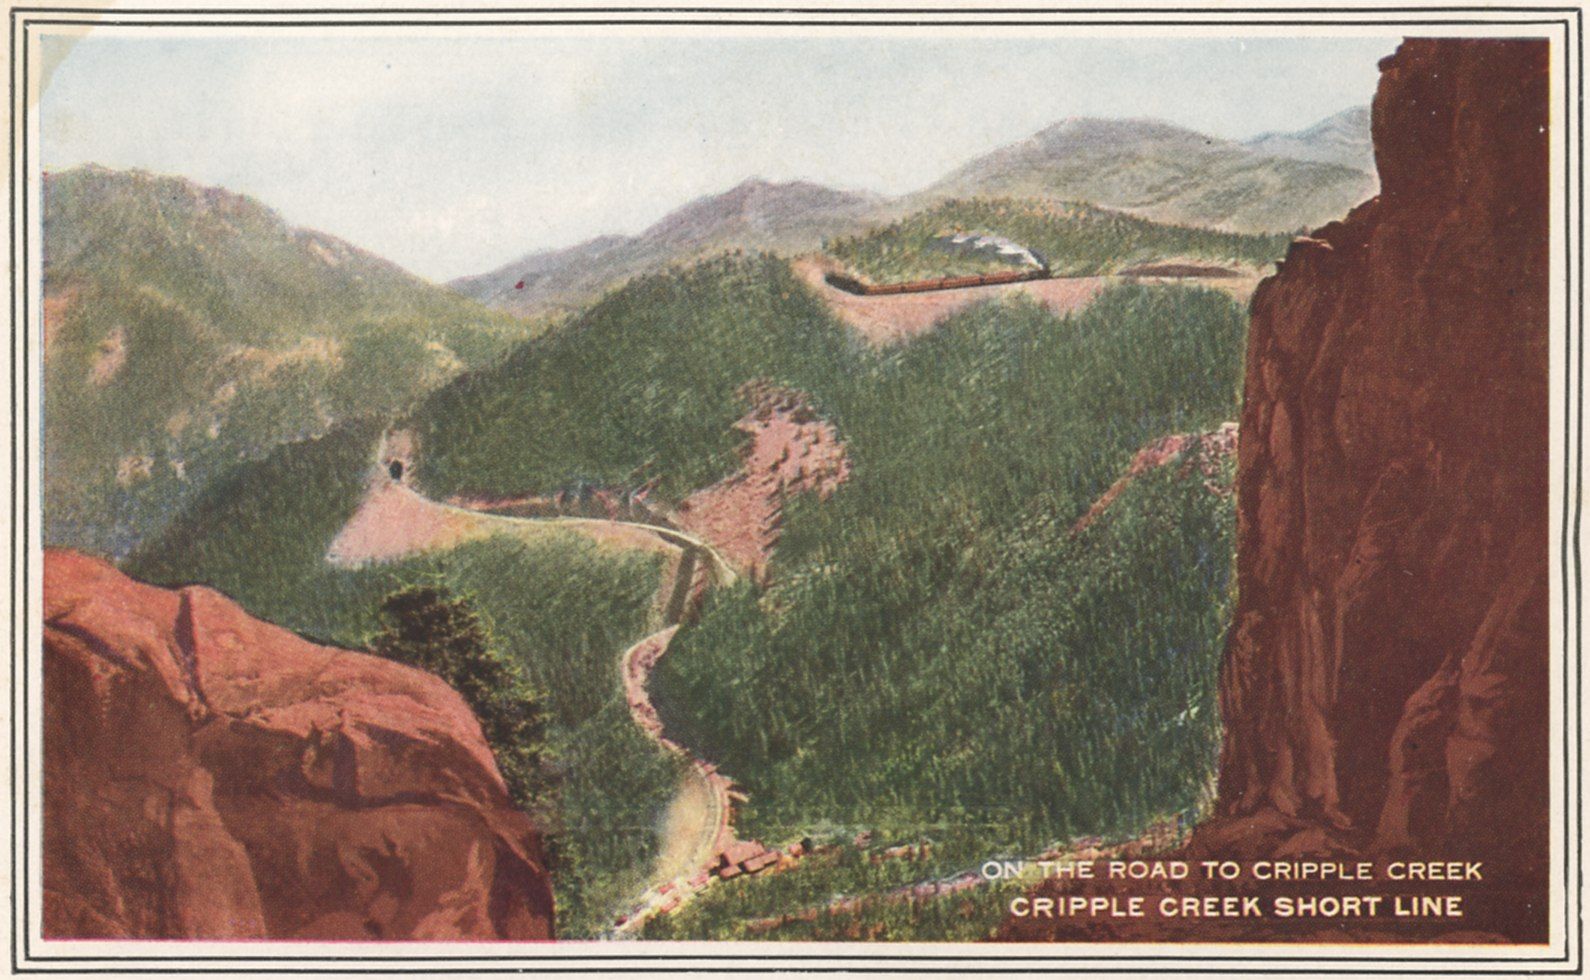 On the Road to Cripple Creek - Cripple Creek Short Line